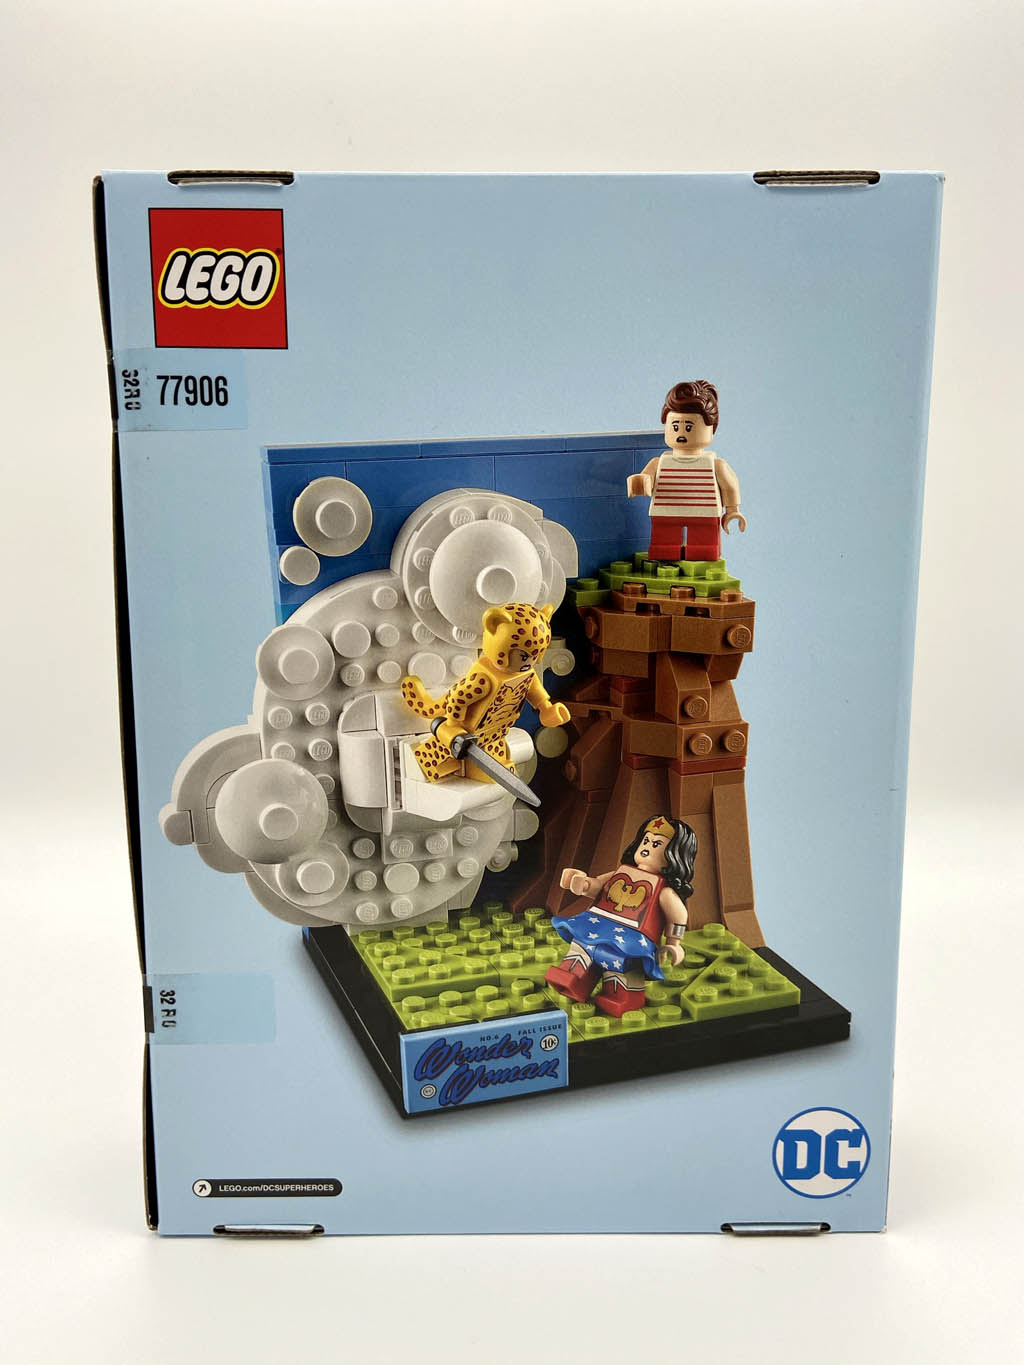 LEGO DC 77906 Wonder Woman 